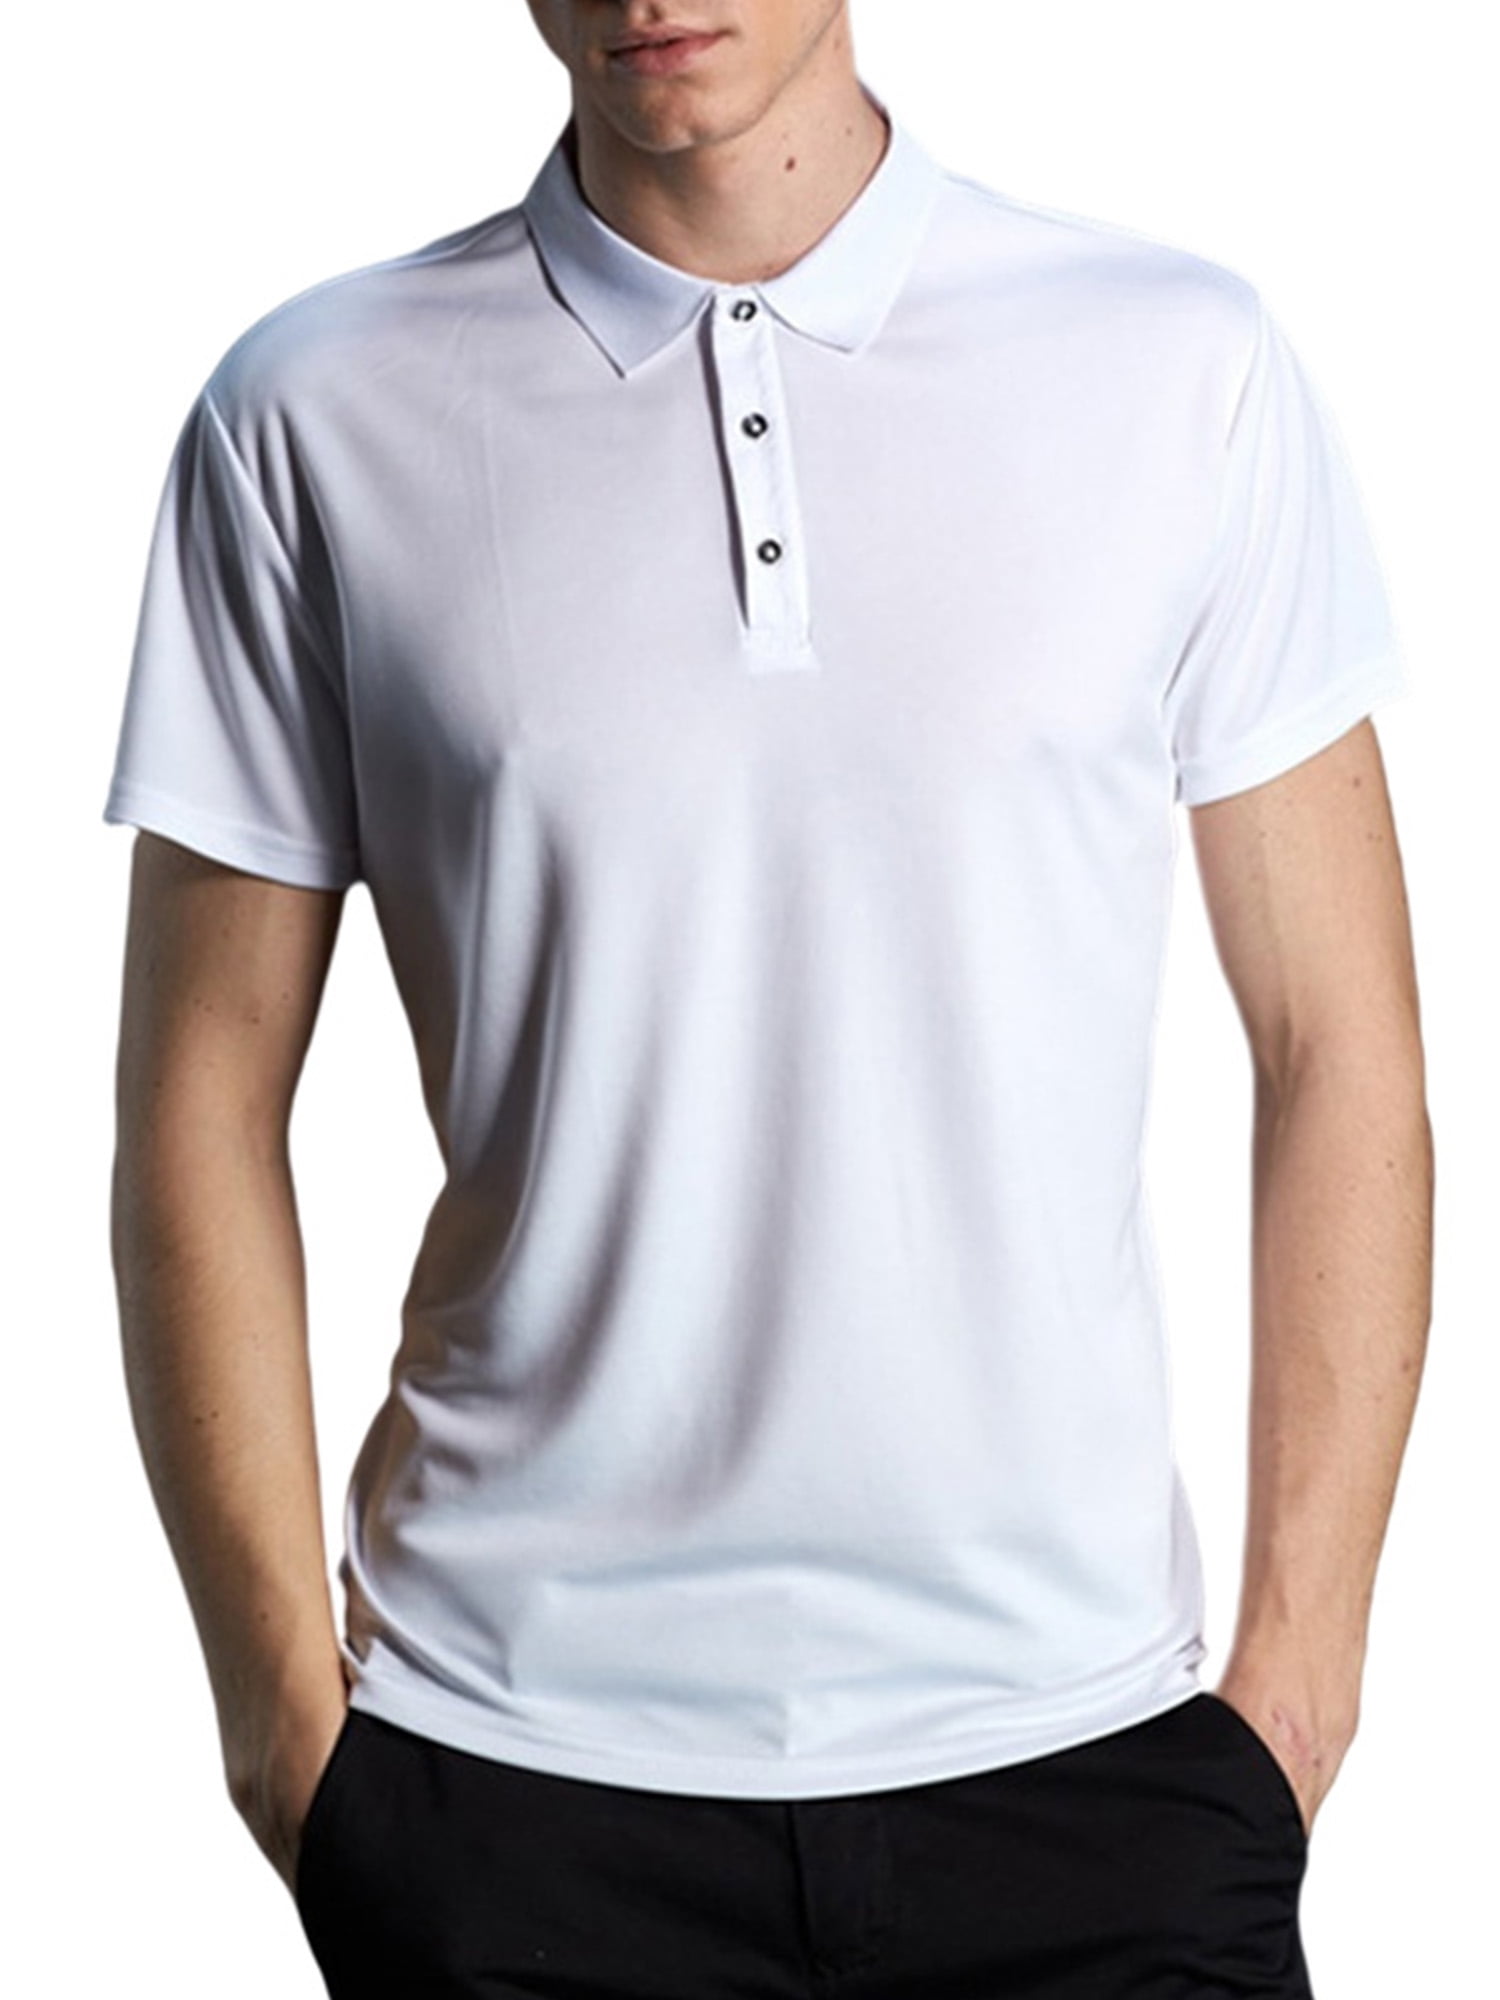 Black Skull Lover Premium Polo Shirt US Size S-5XL Short Sleeve Printed Unisex 